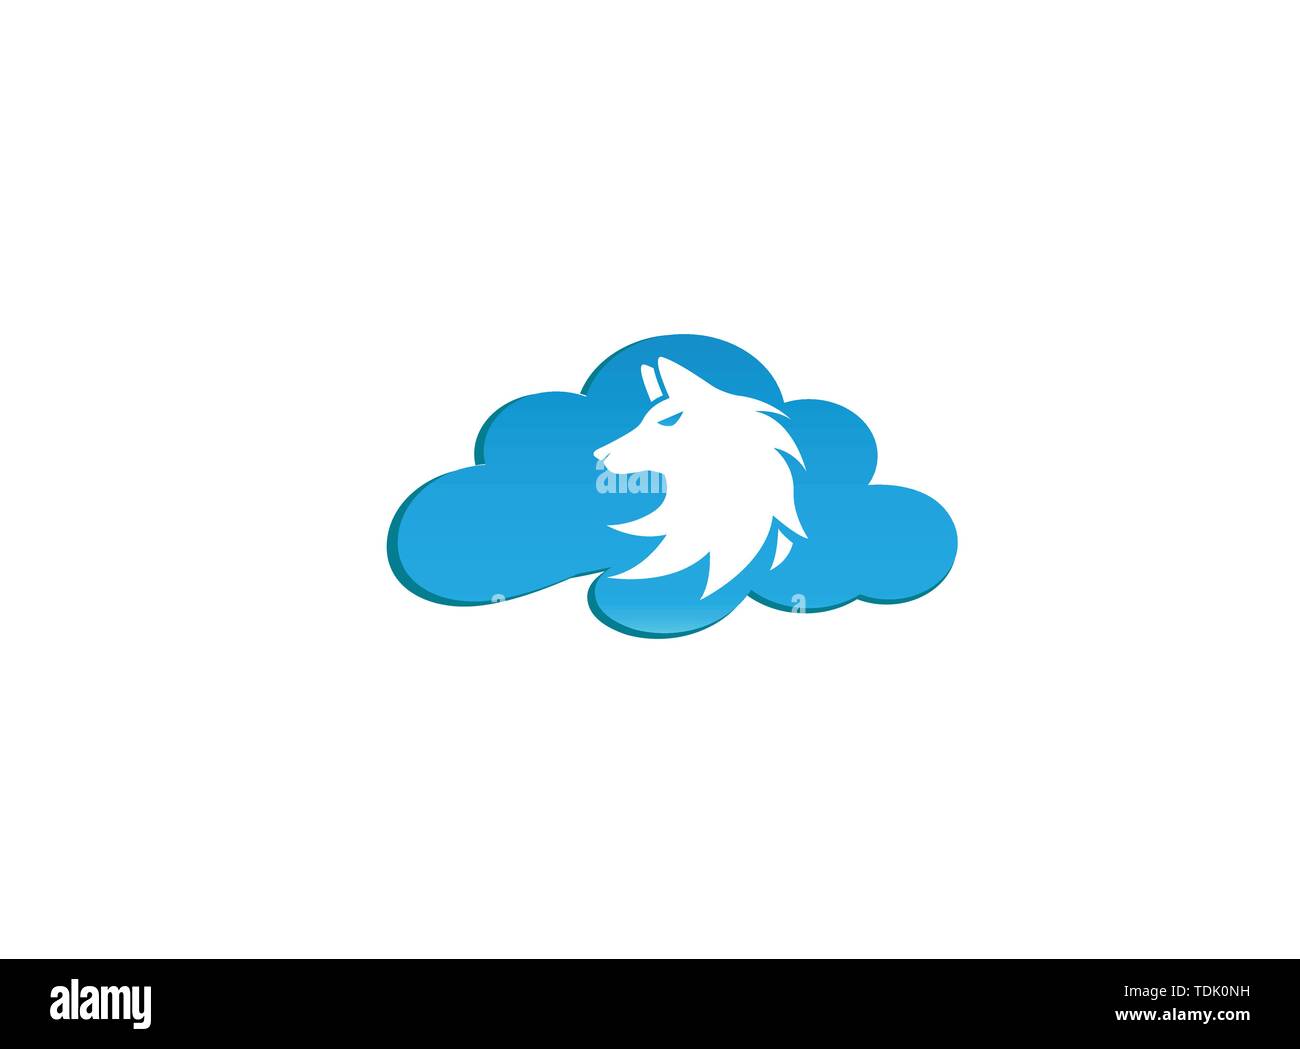 Wolf head logo fox face illustration design illustration in a cloud shape icon Stock Vector